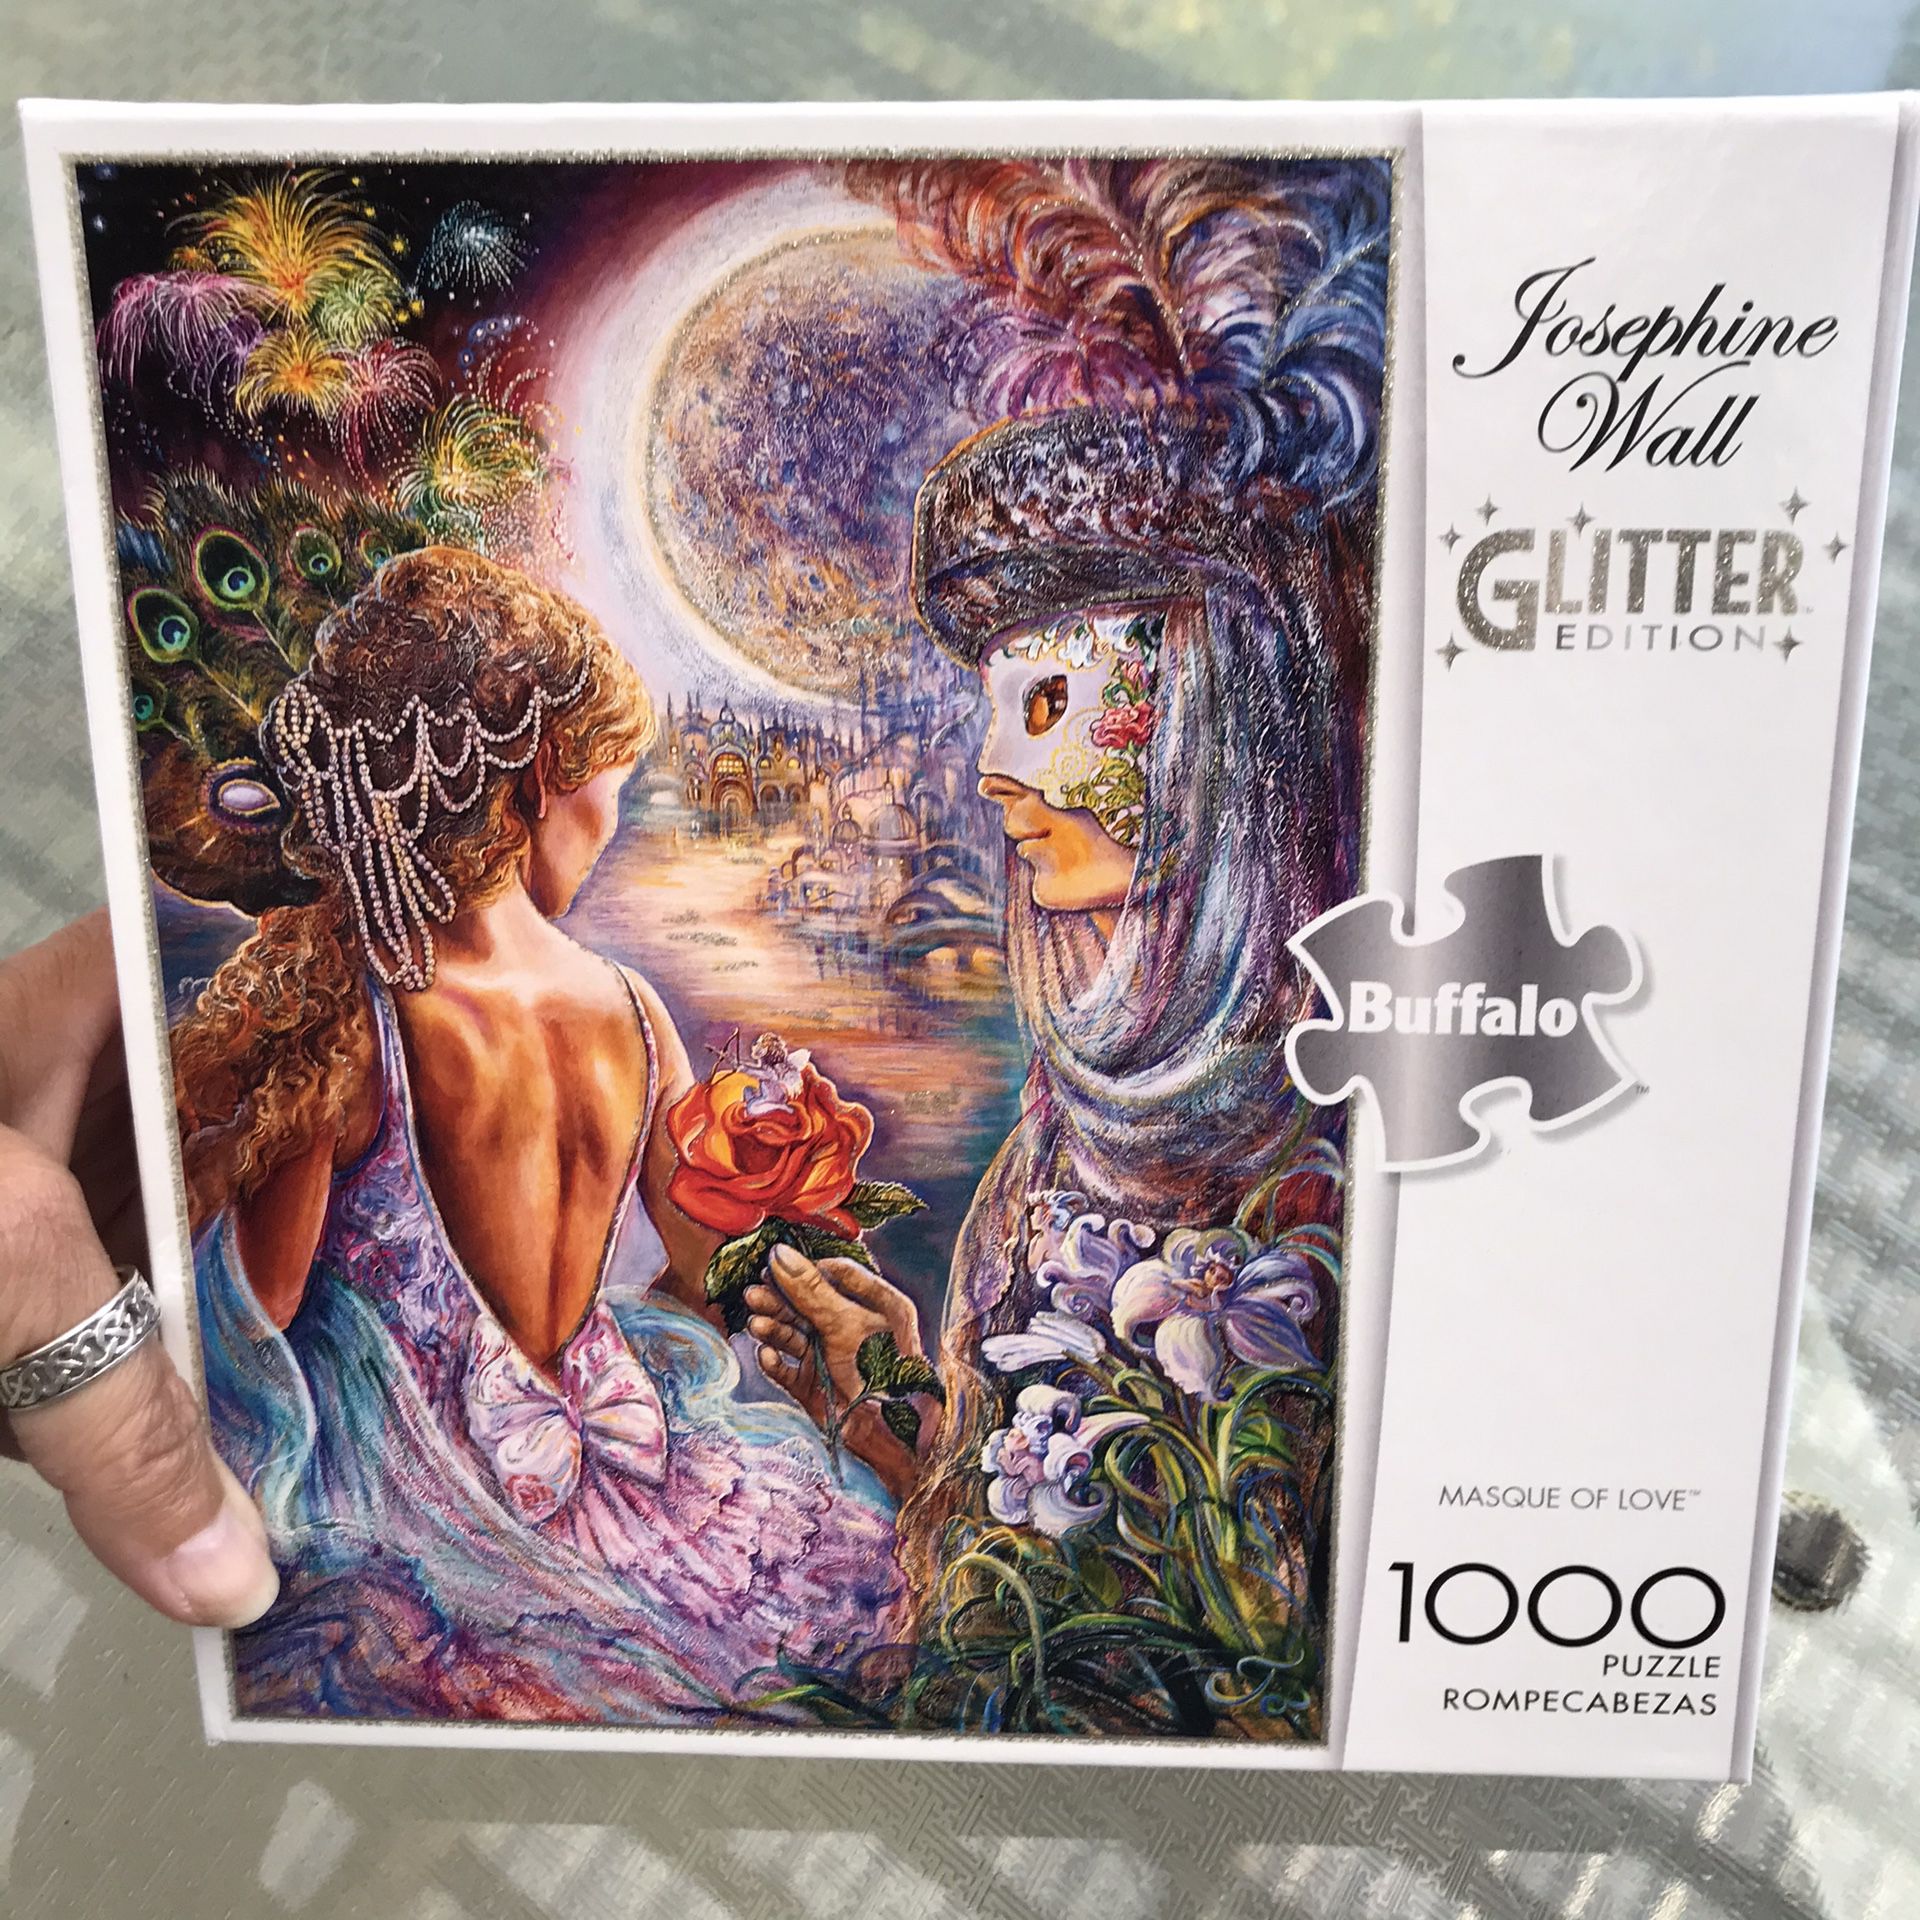 NEW!!! 1000 Piece Puzzle GLITTER “MASQUE OF LOVE”